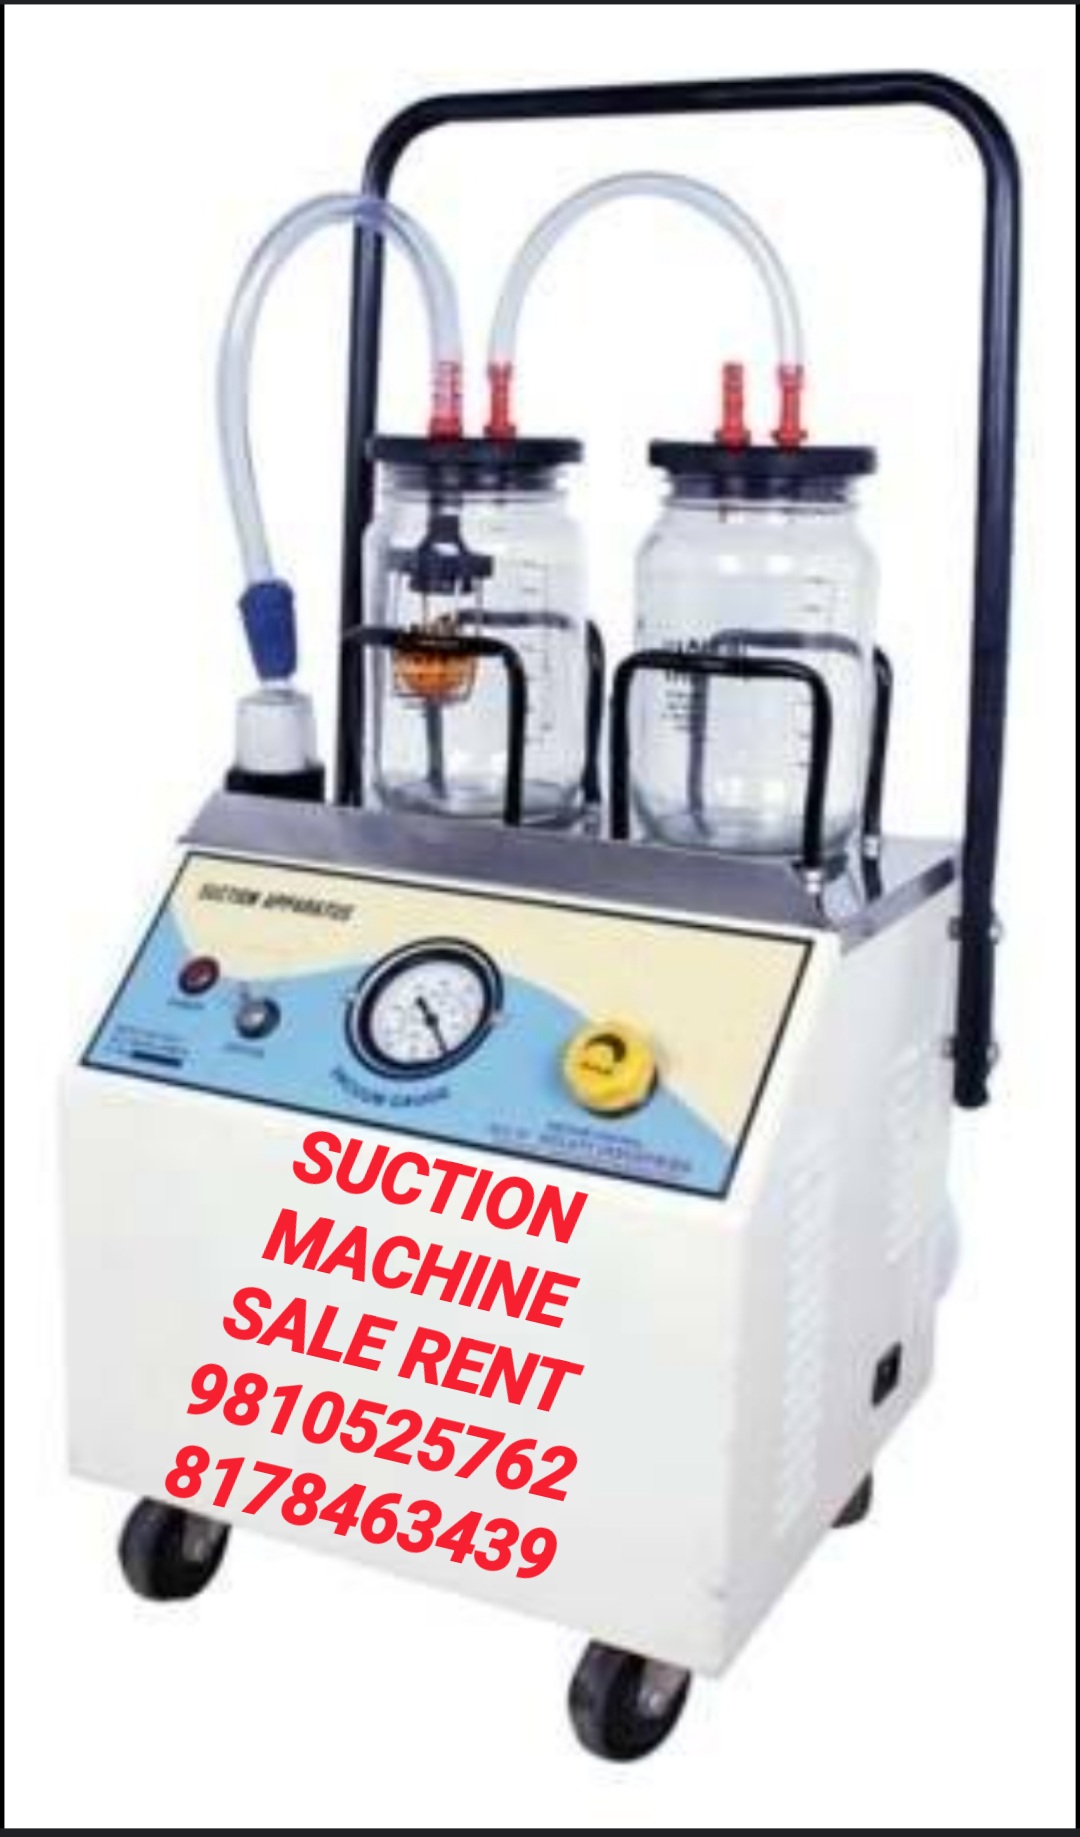 SUCTION MACHINE REPAIR IN DILSHAD GARDEN 9810525762